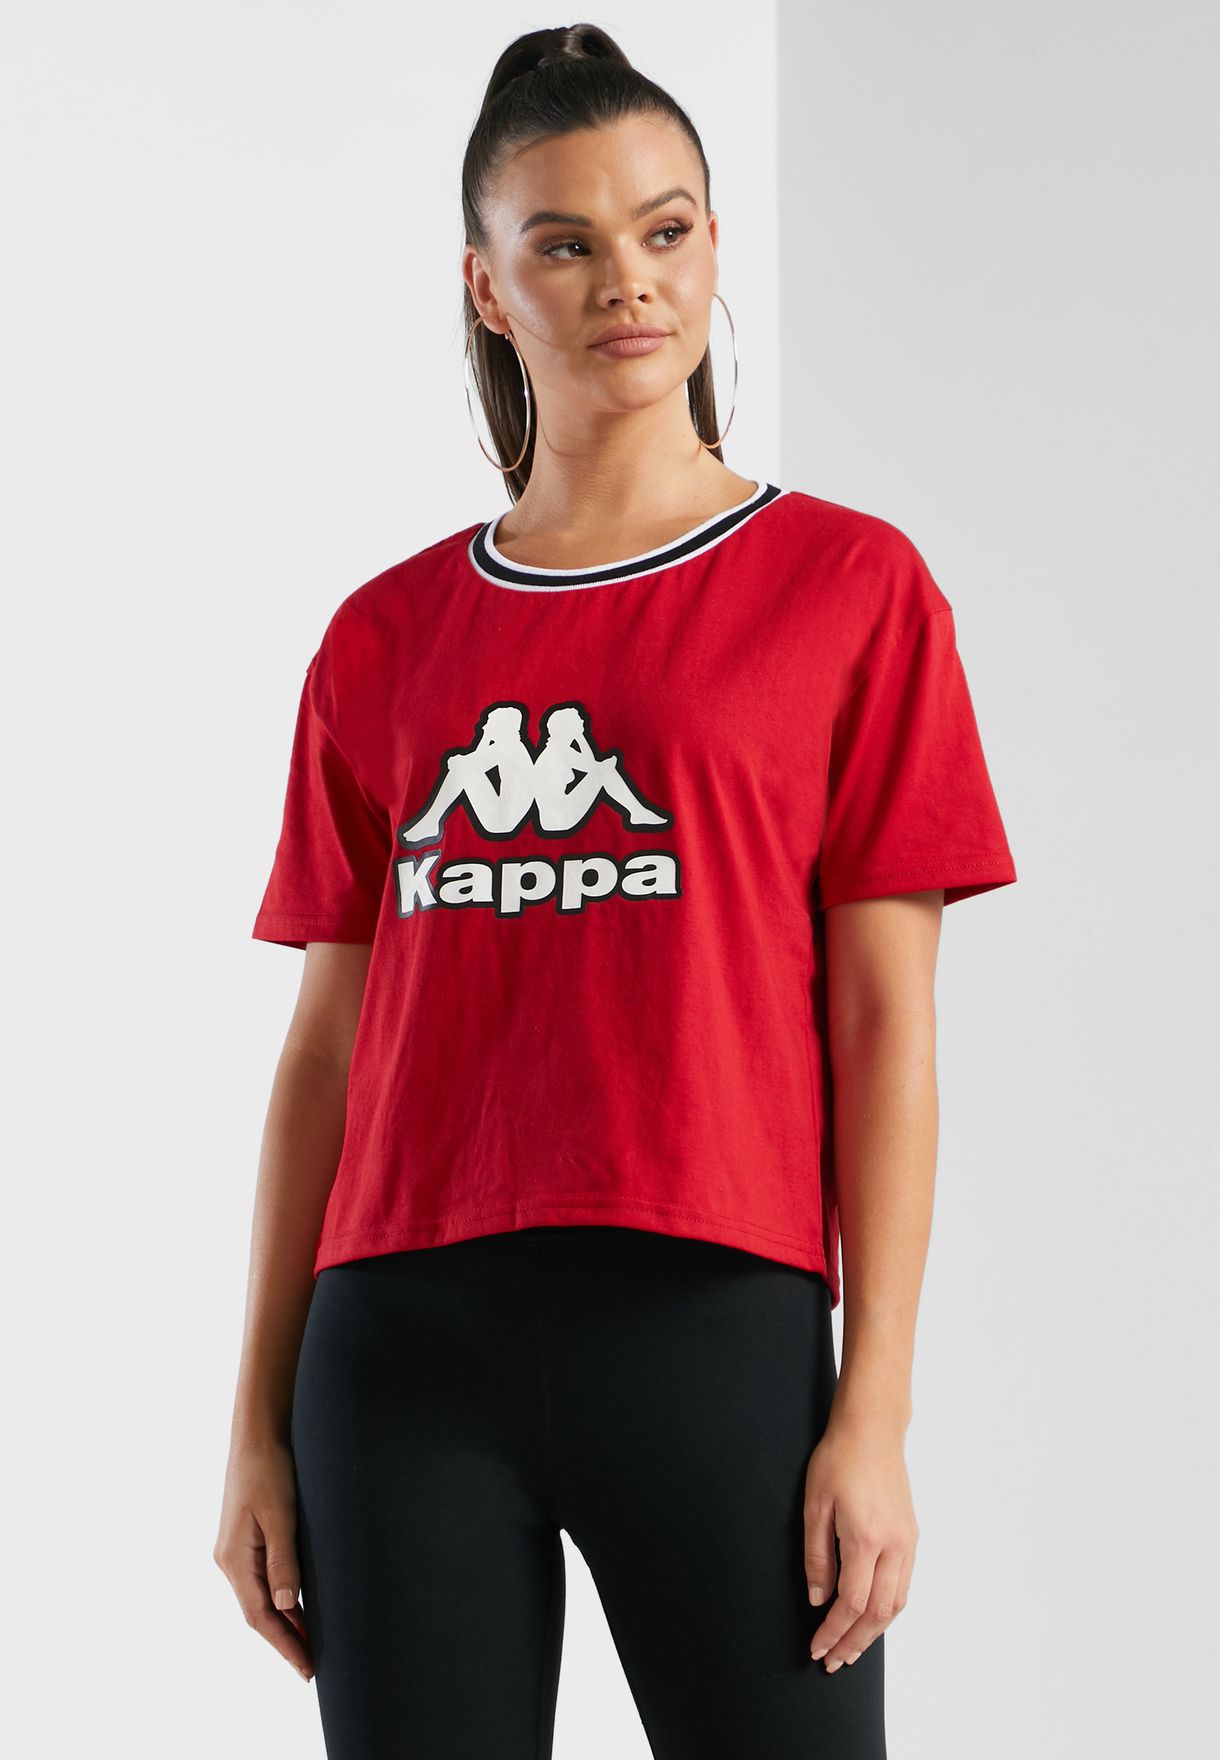 kappa t shirt ladies